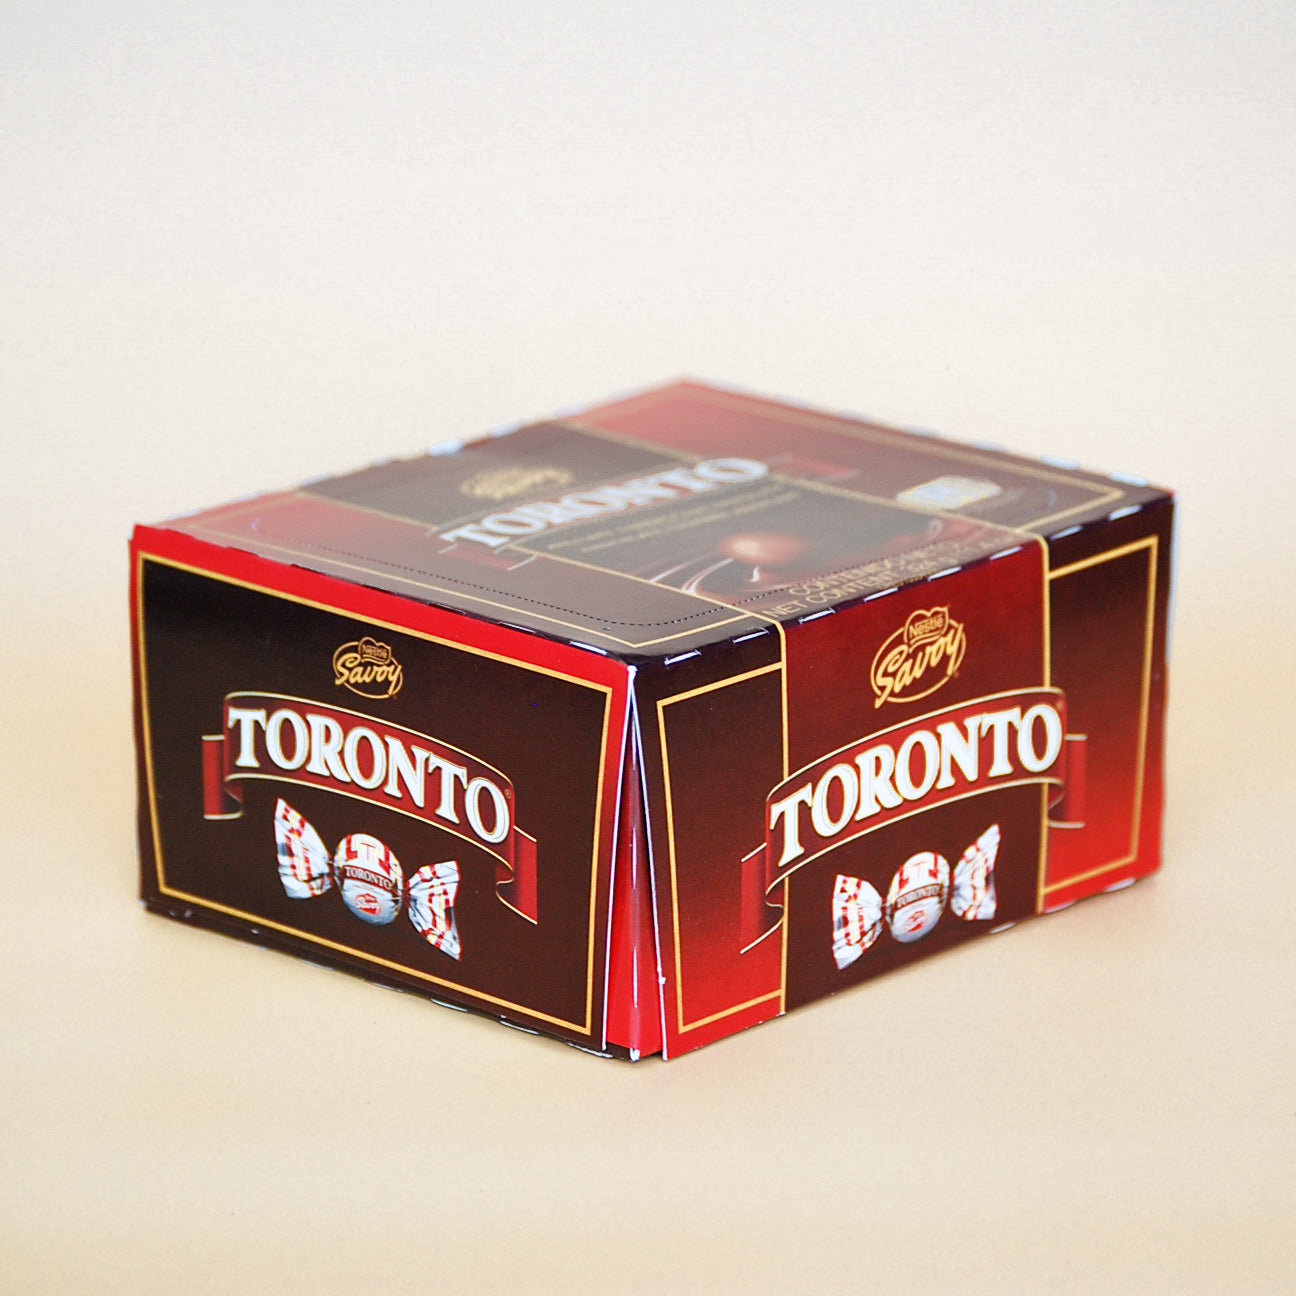 Toronto box 324 gr / 11.43 oz